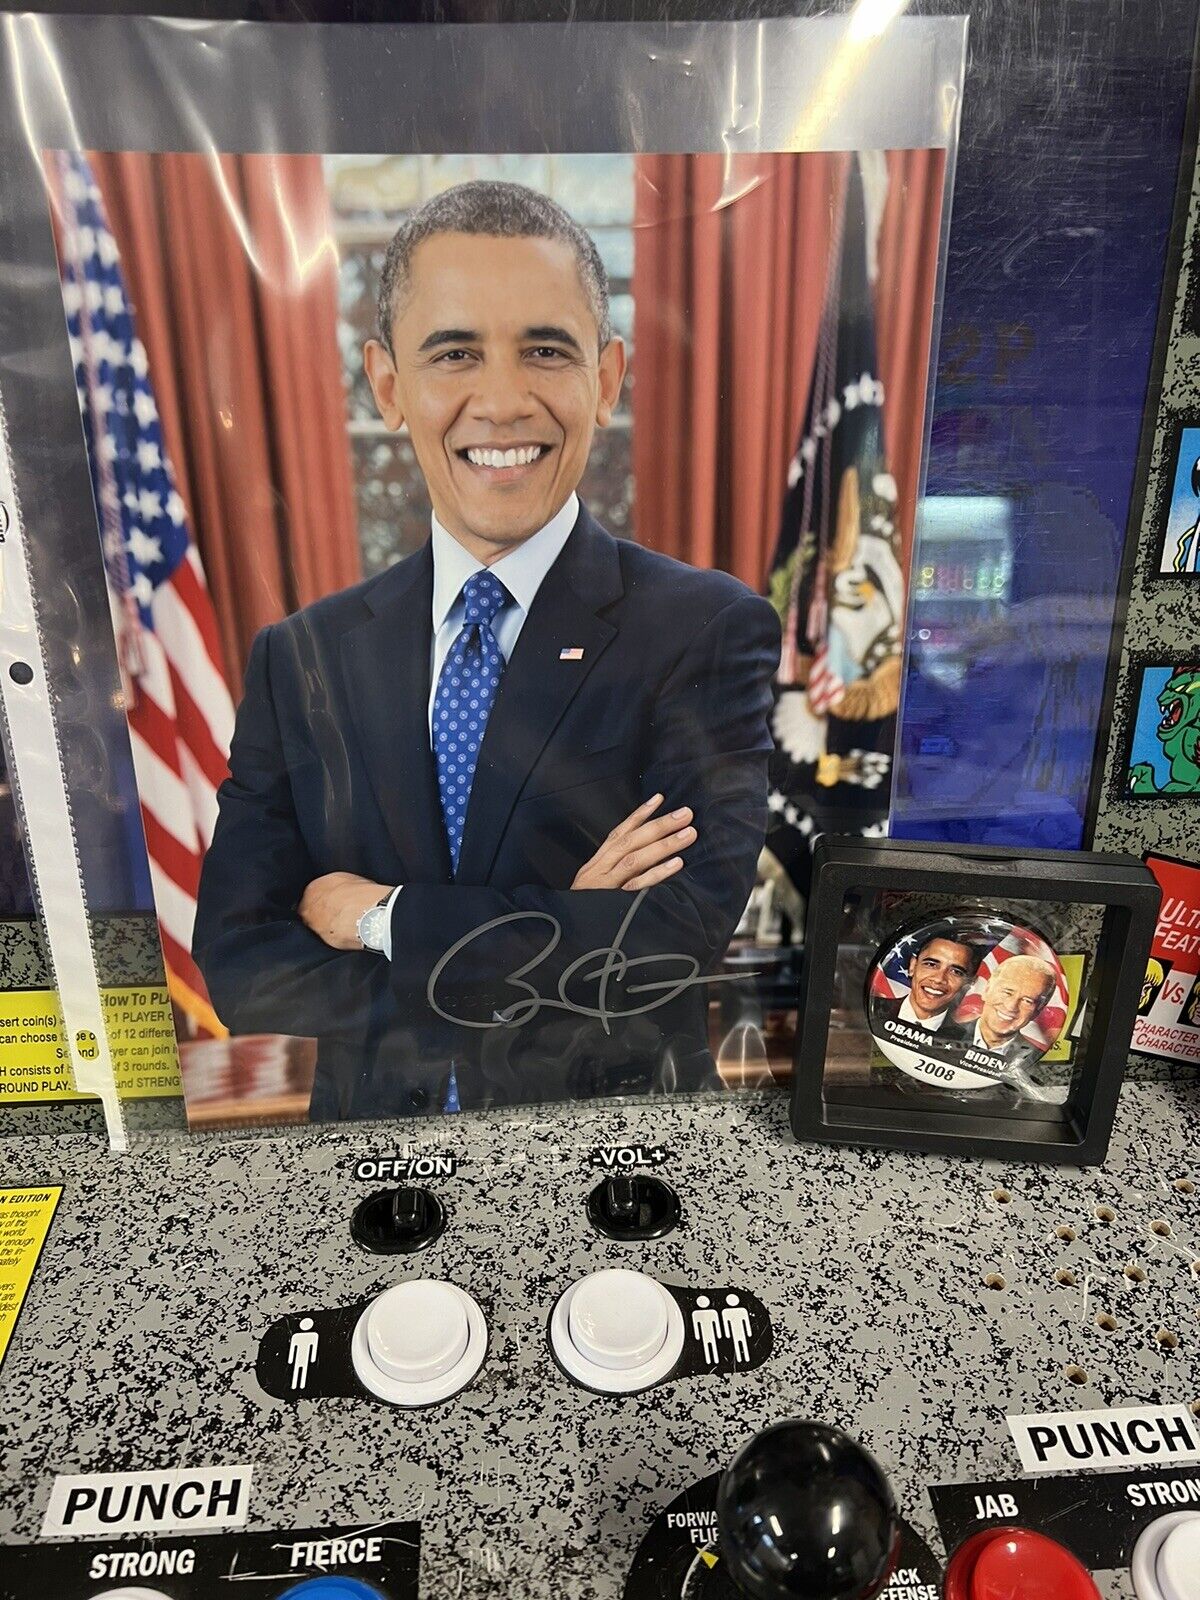 Barack Obama Signed Autographed 8x10 Photo & 2008 Campaign Campaign Pin Biden